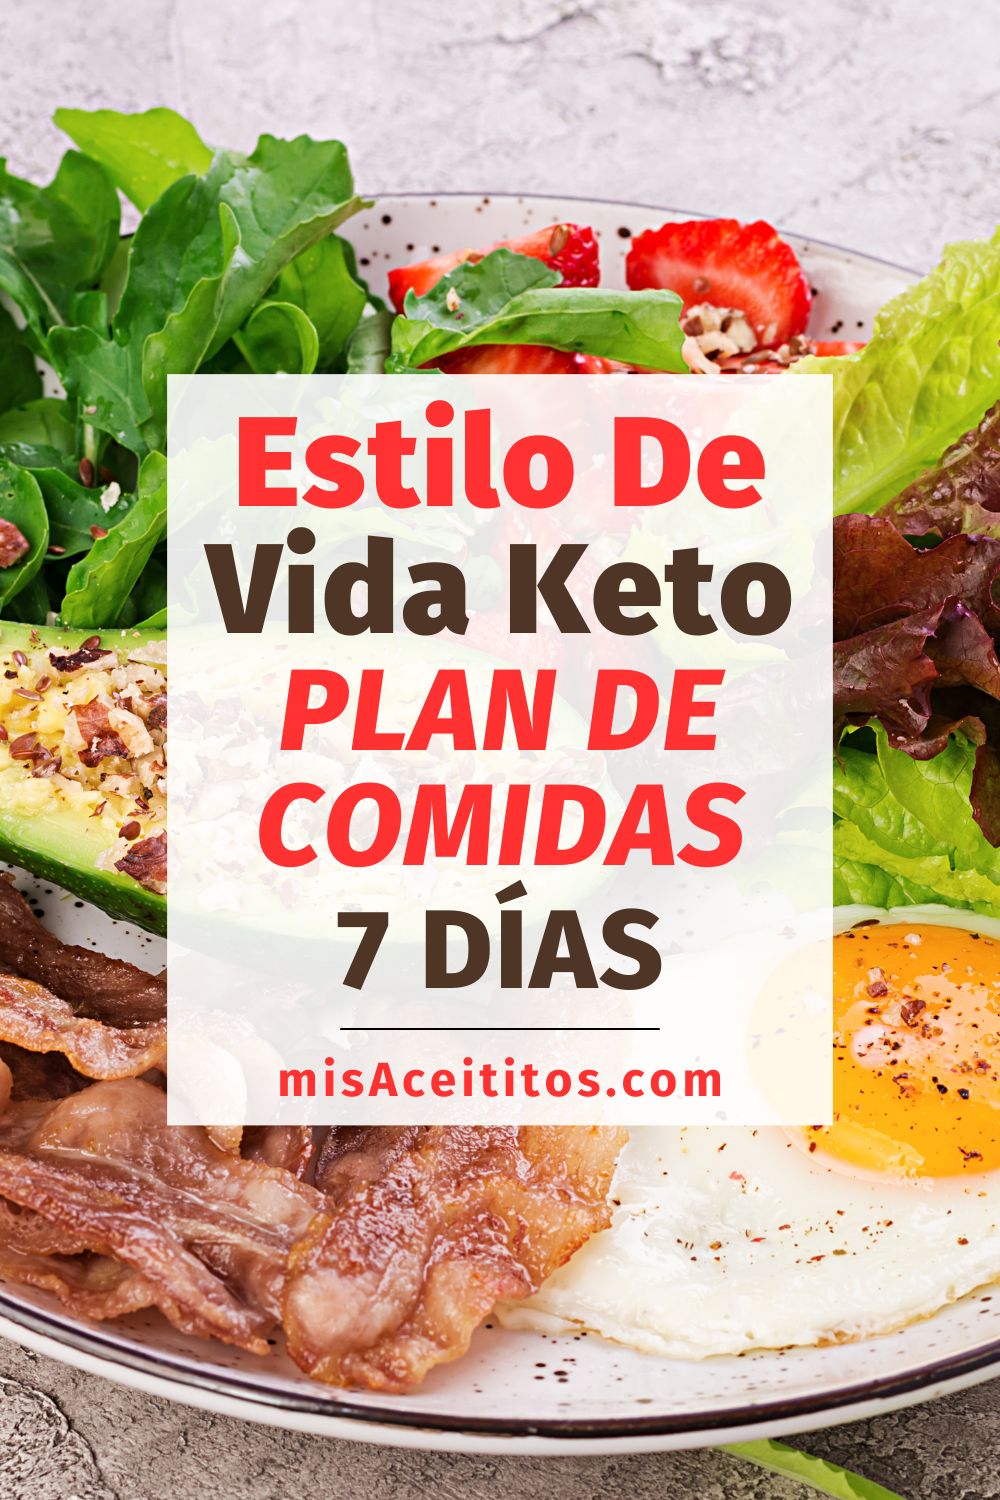 Plato con comida de la dieta keto: huevo frito, bacon, aguacate, rúcula y fresas. Desayuno keto.